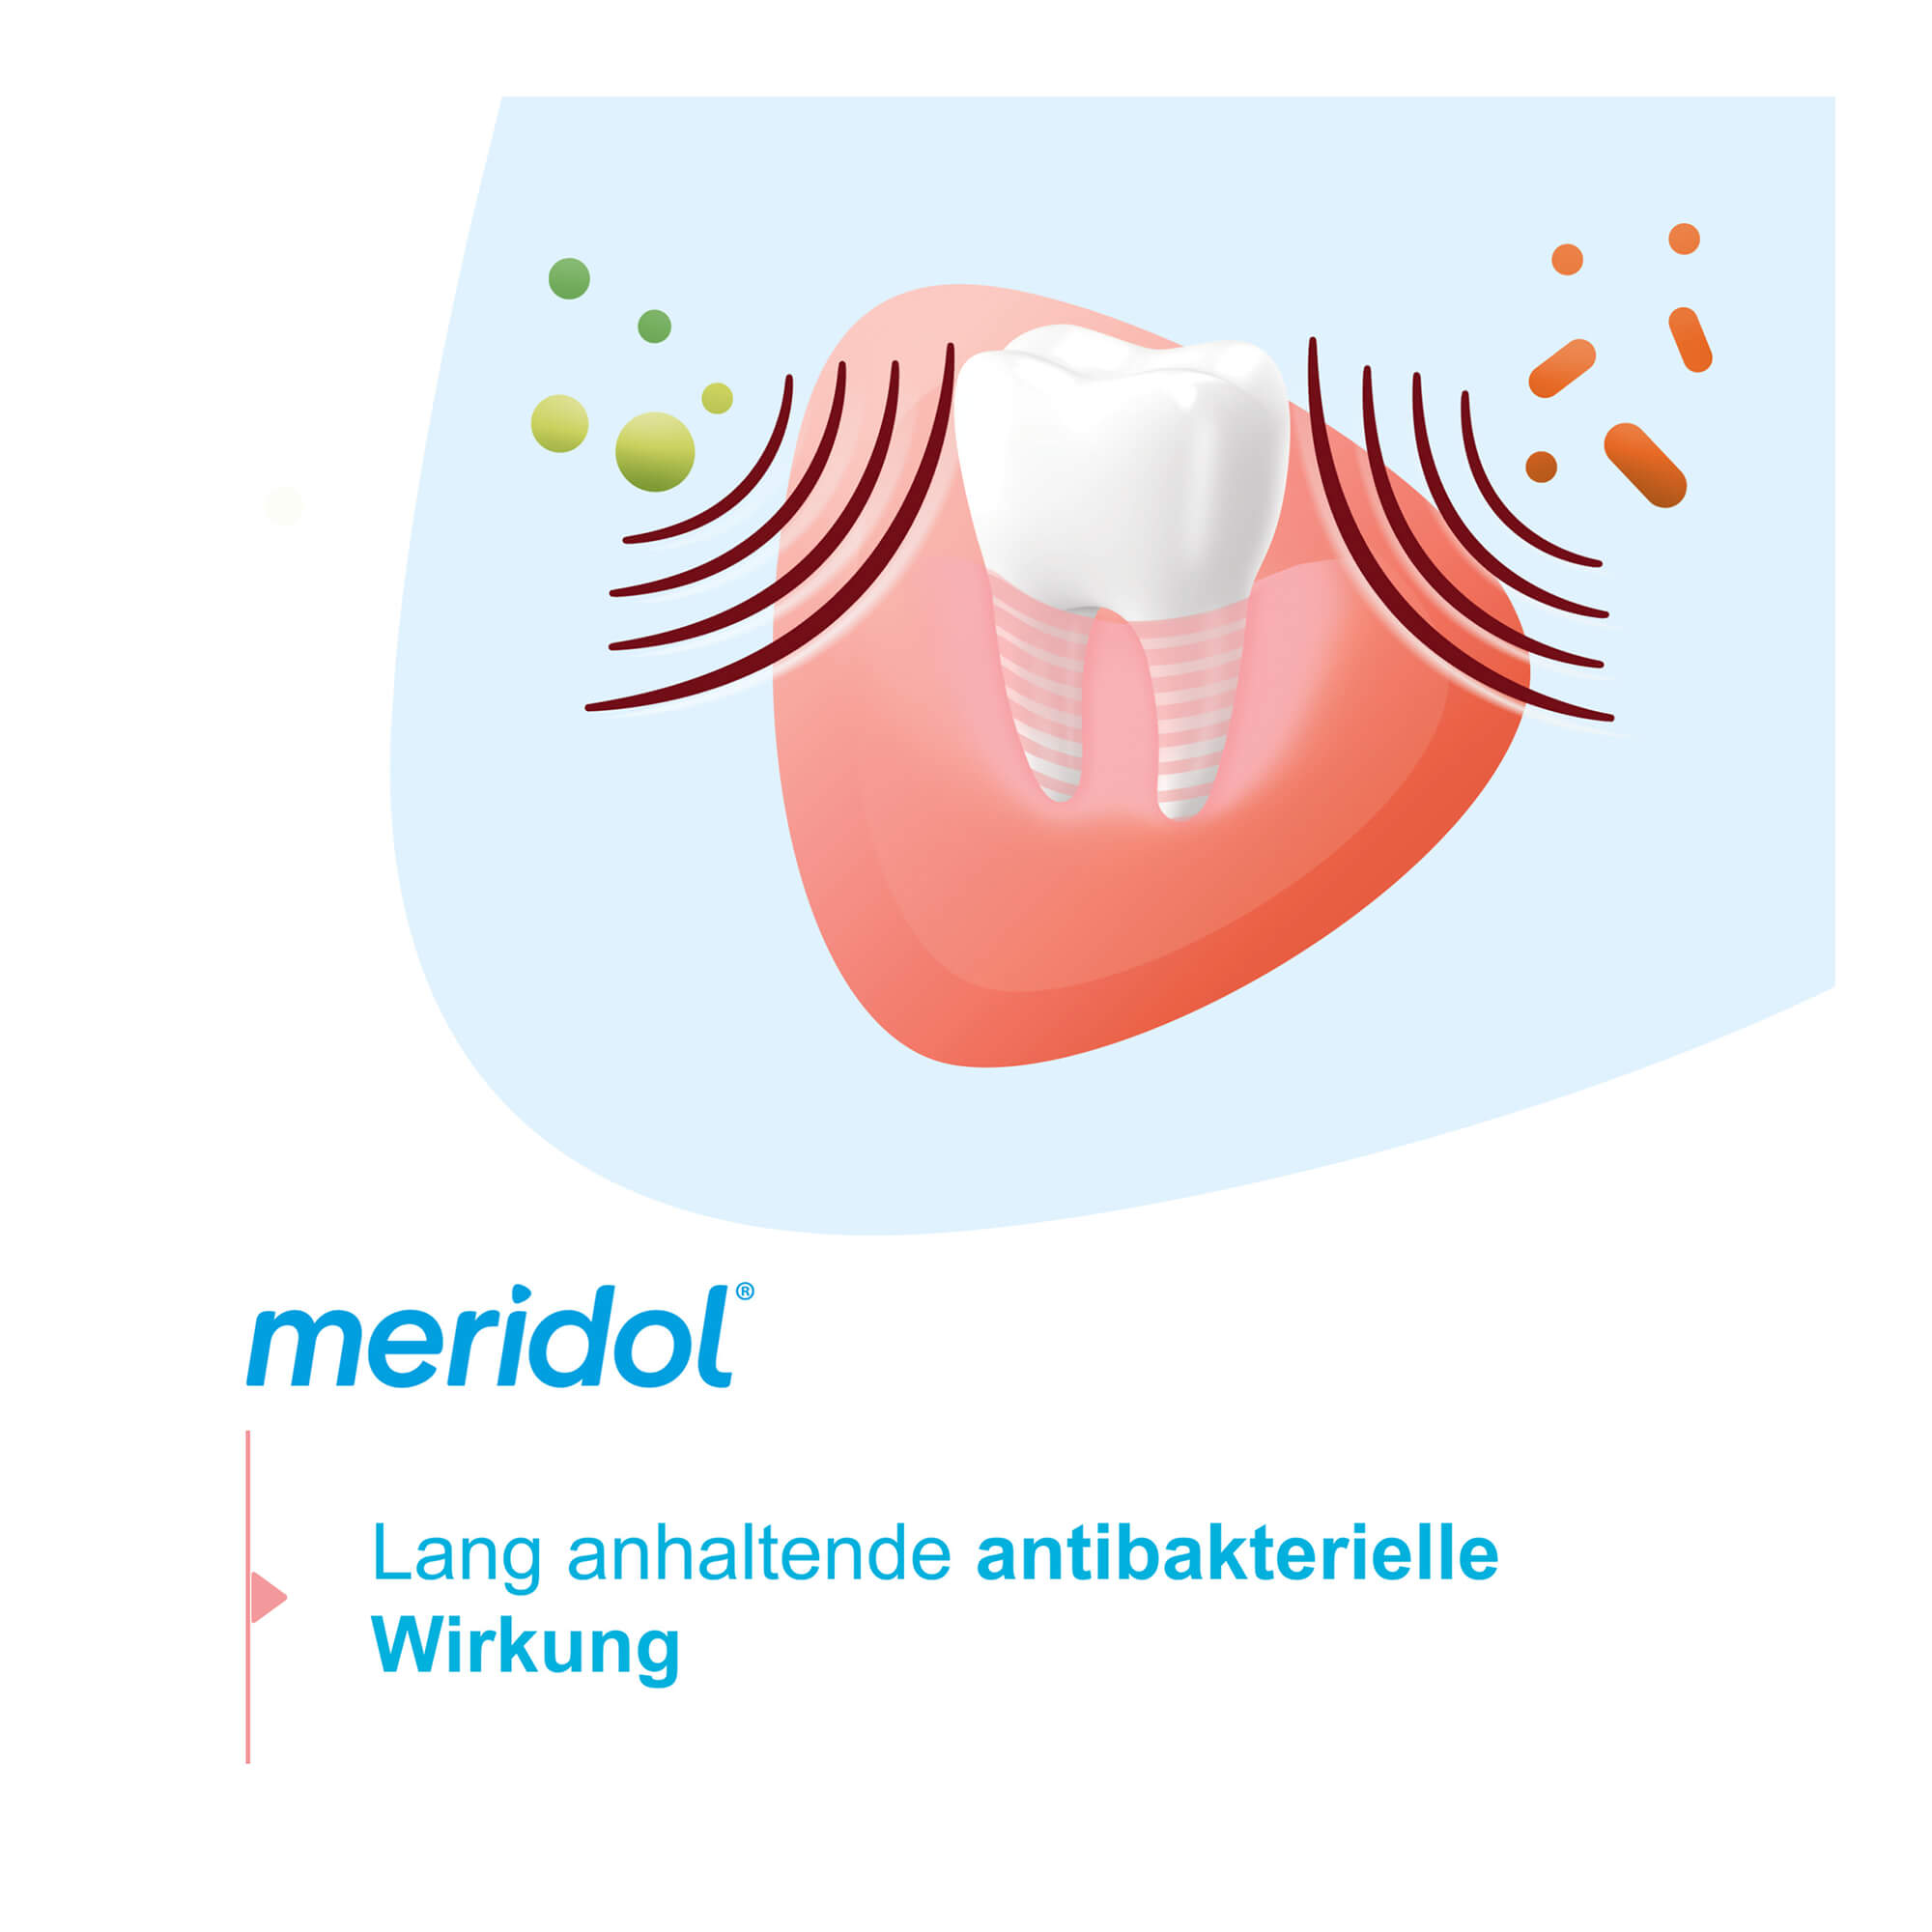 Grafik Meridol Rundumpflege antibakterielle Wirkung